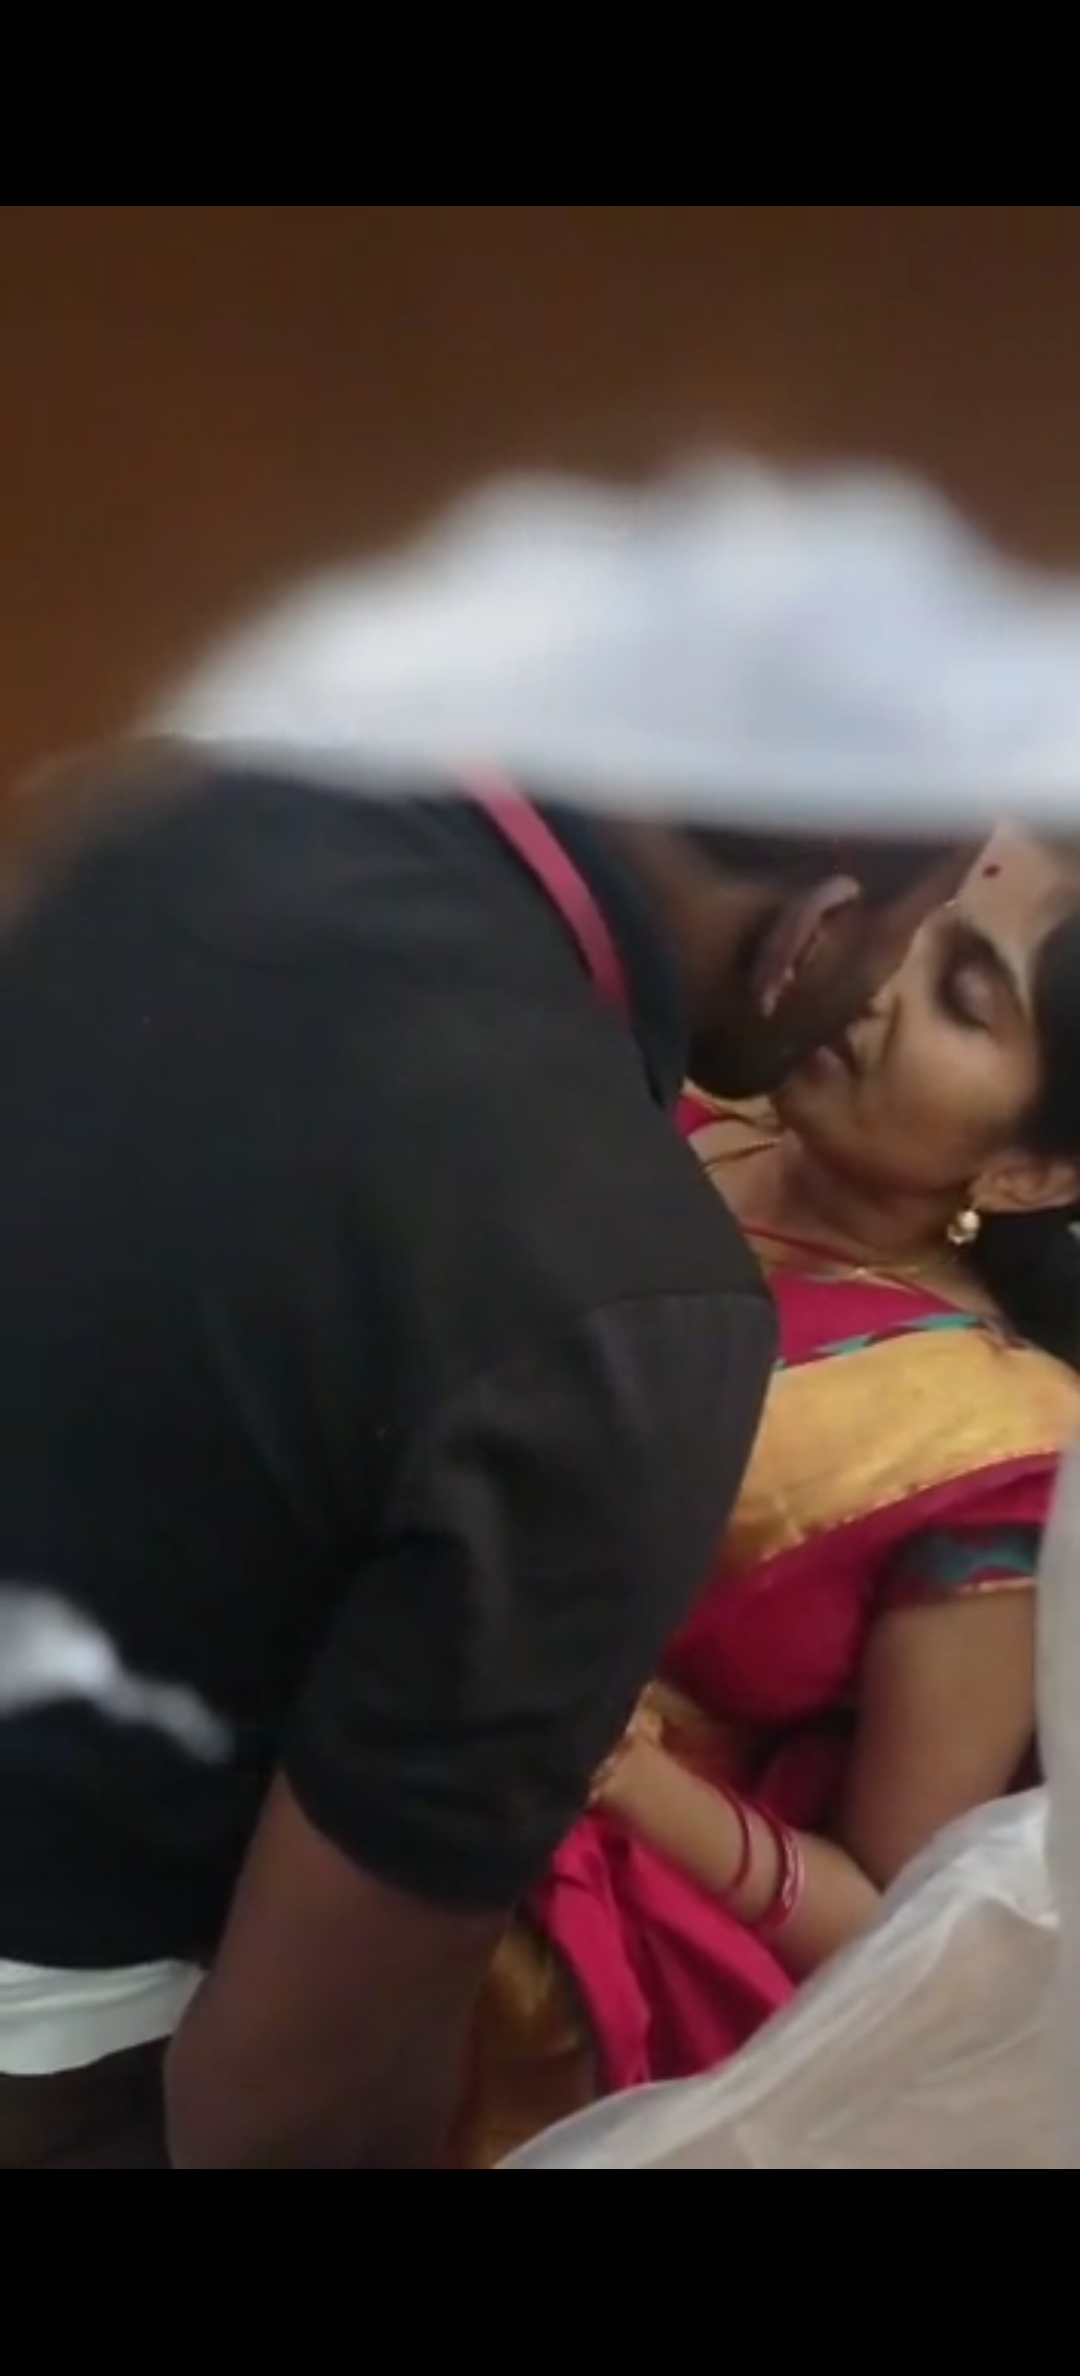 Tamil porn videos free download